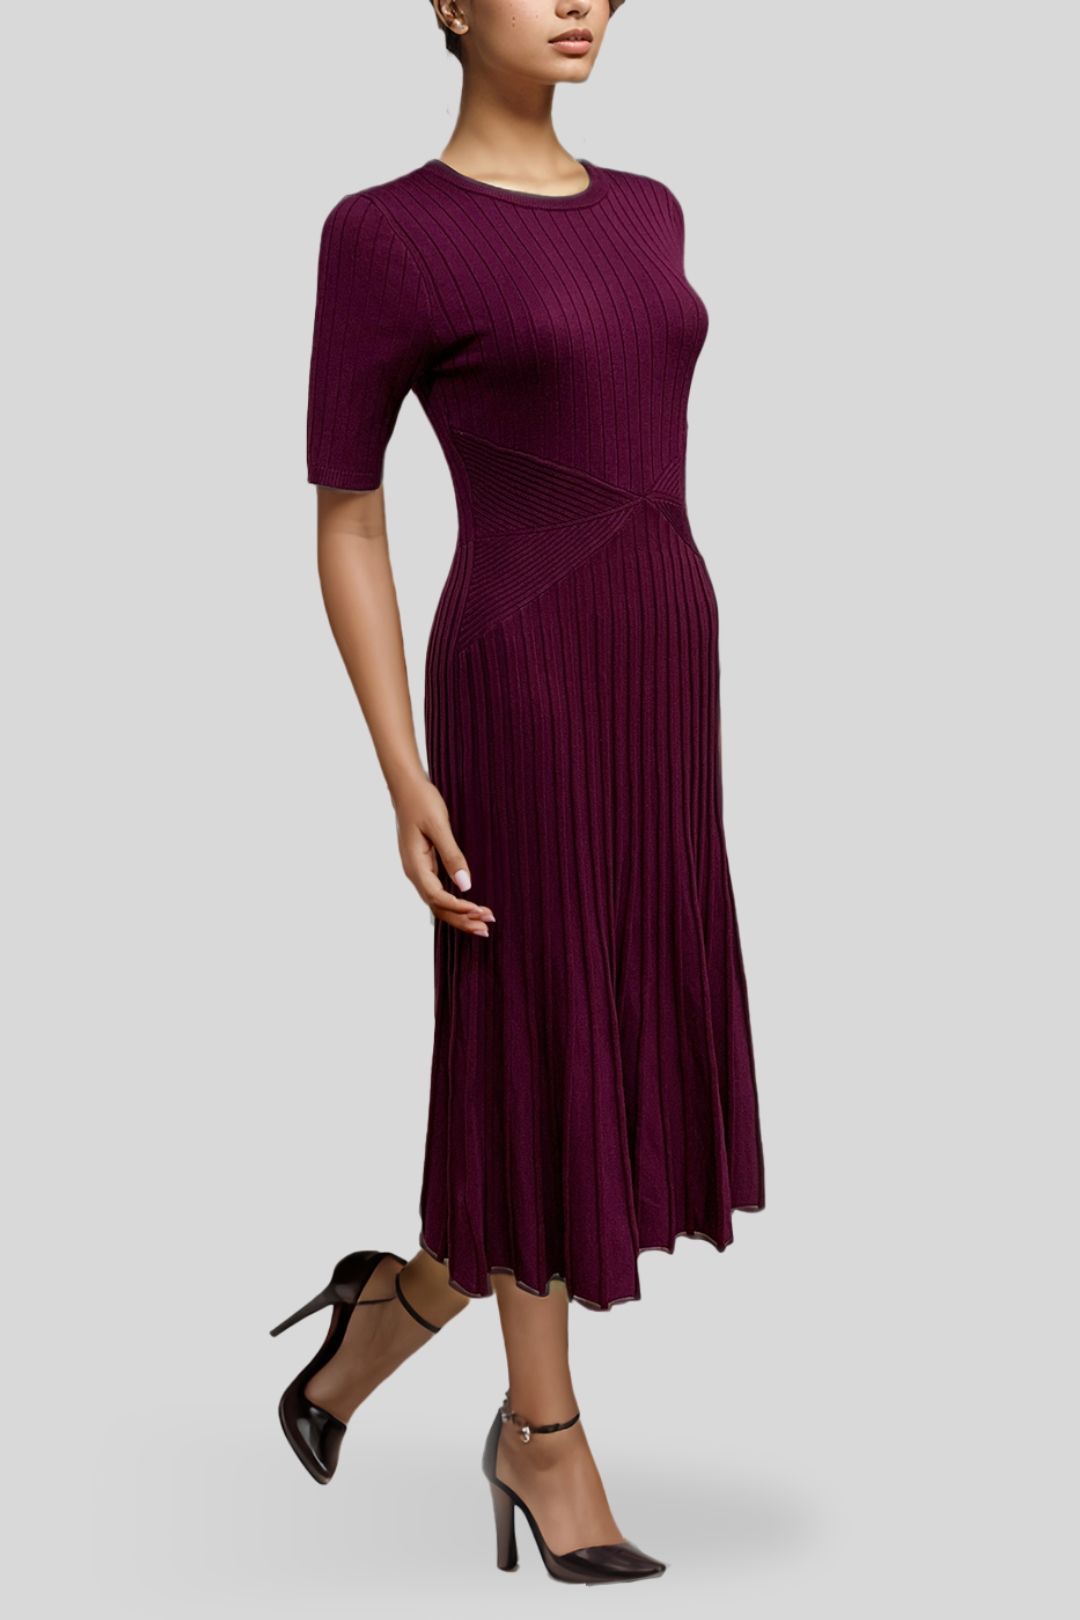 Portmans	Purple Ribbed Knit Midi Dress Side